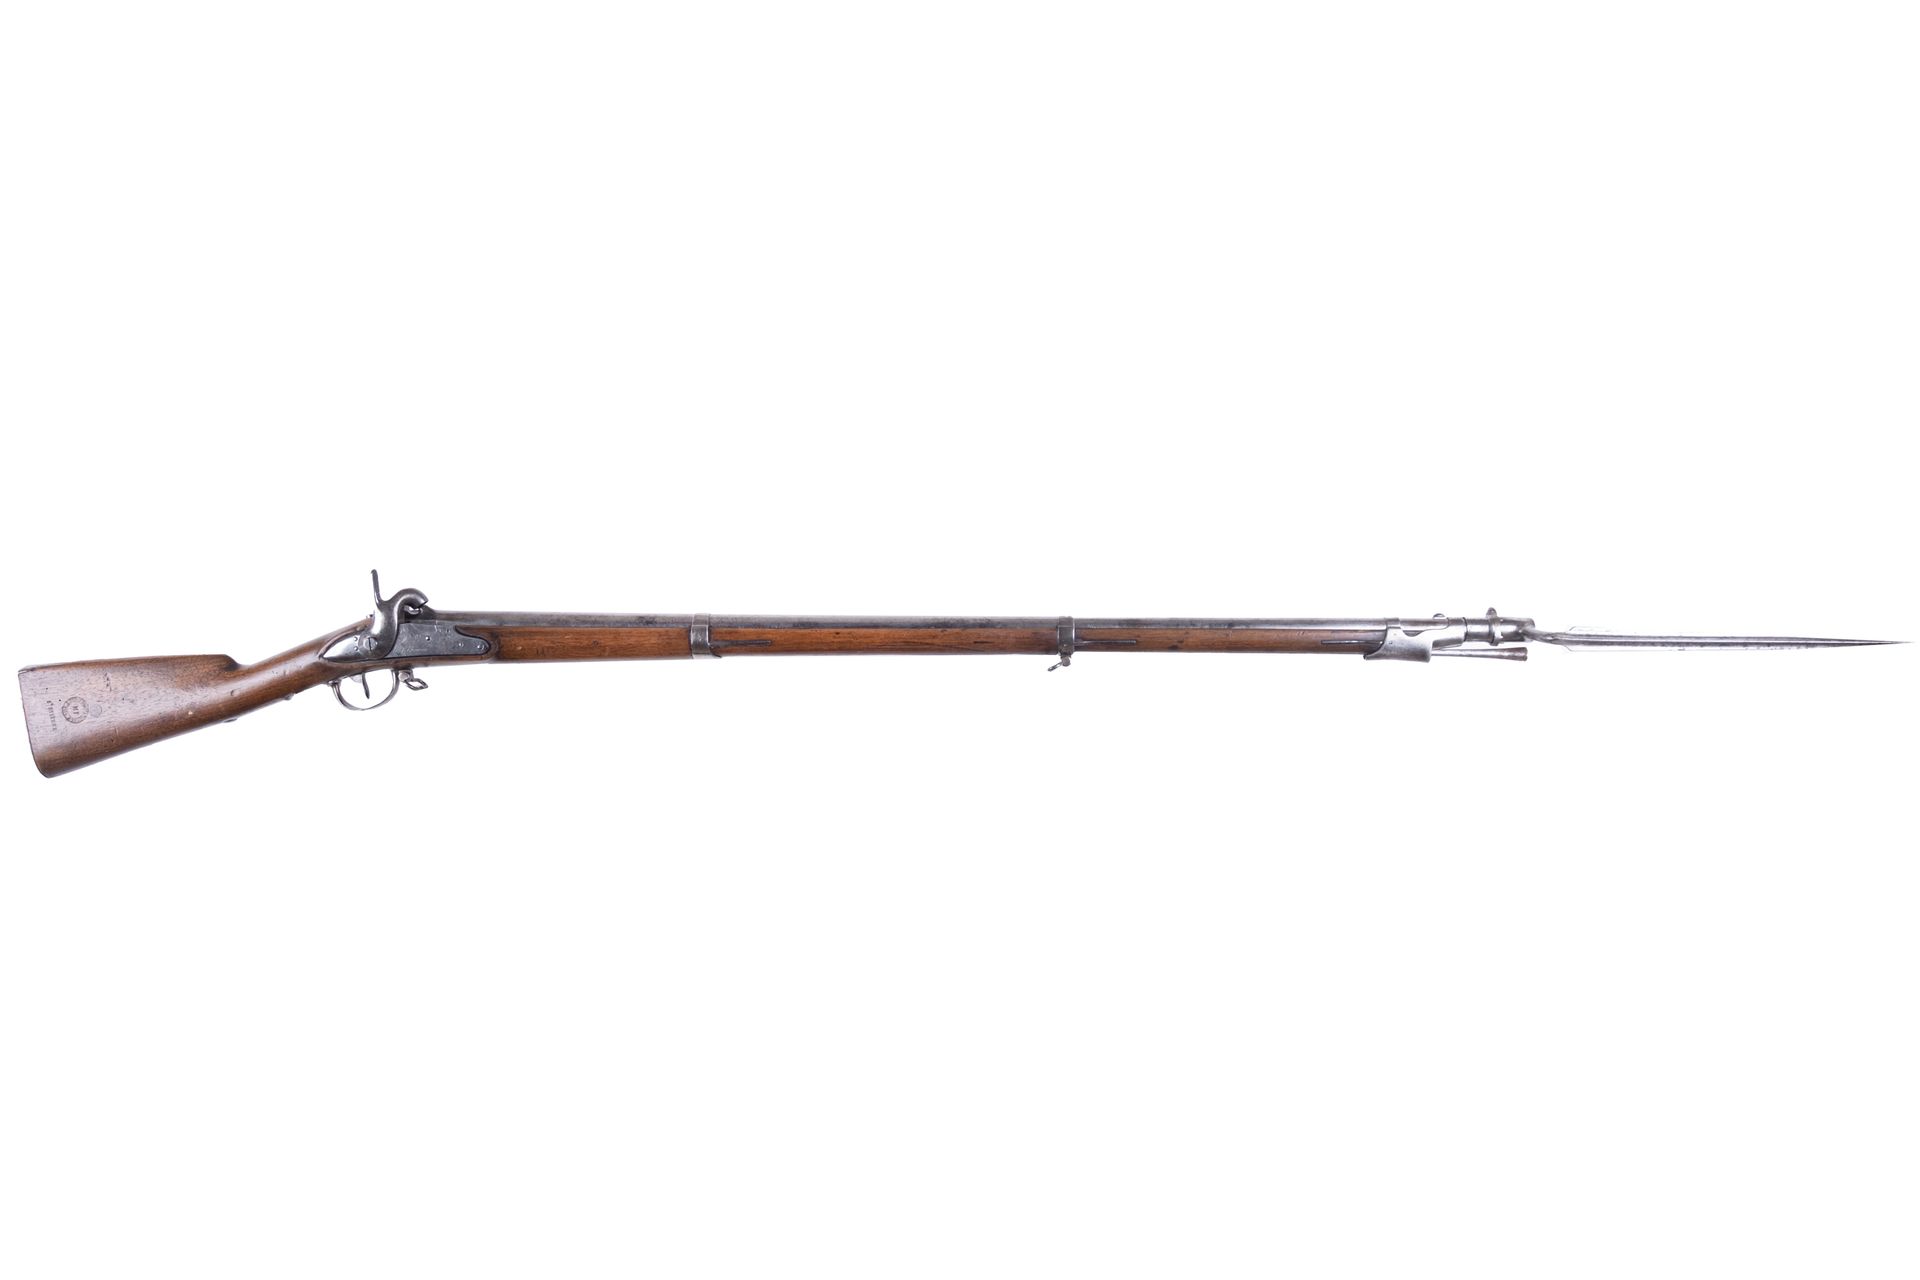 Null Fusil de granadero modelo 1822 transformado en modelo de percusión 1840. 

&hellip;